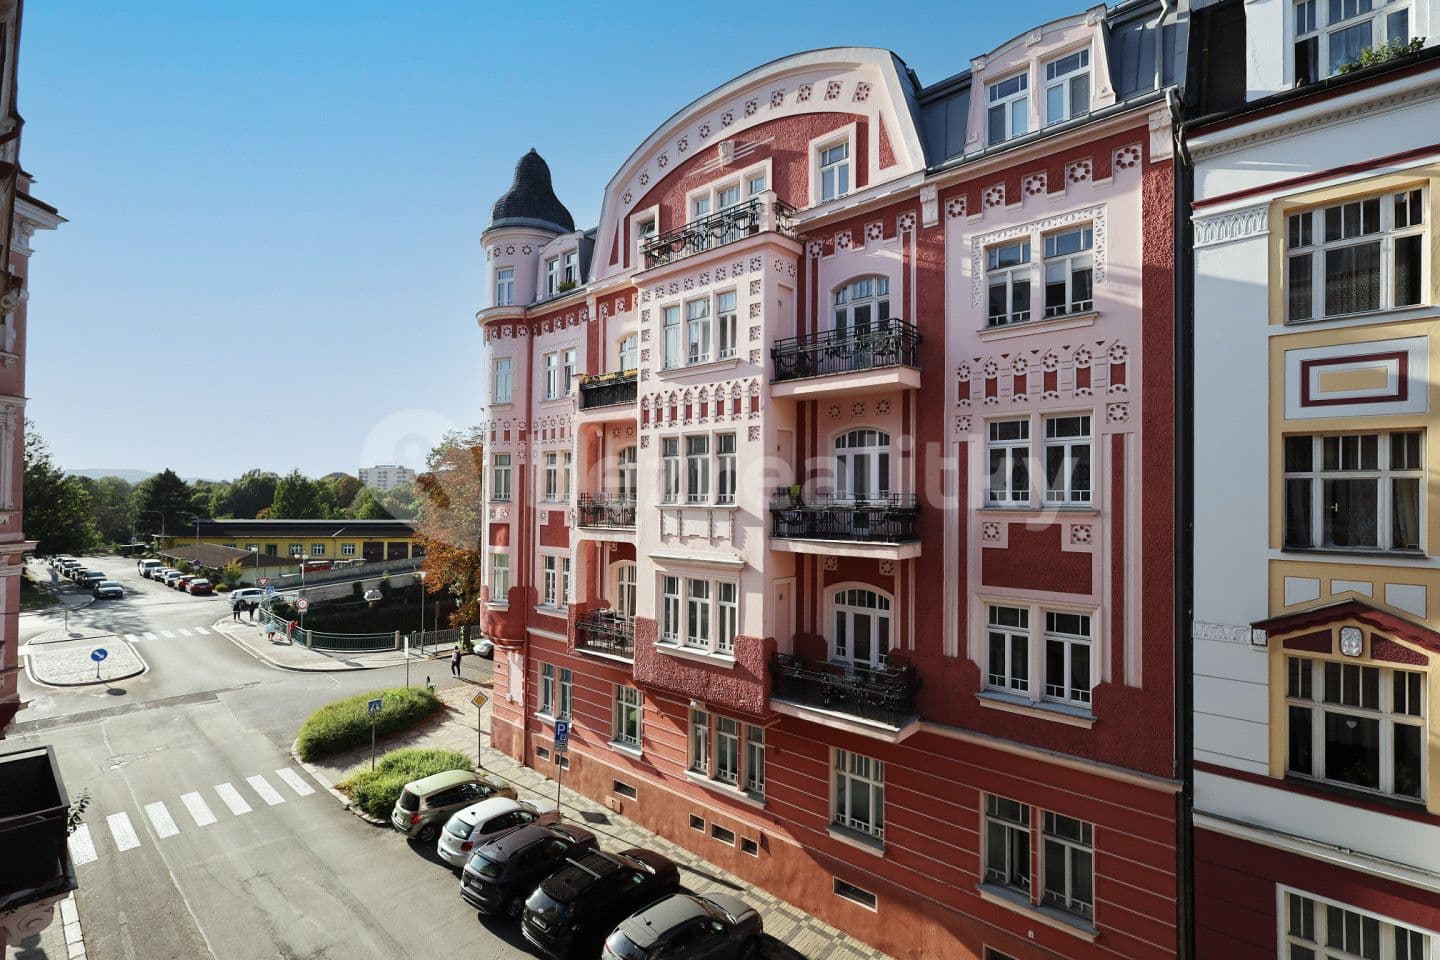 2 bedroom flat for sale, 61 m², Koptova, Karlovy Vary, Karlovarský Region